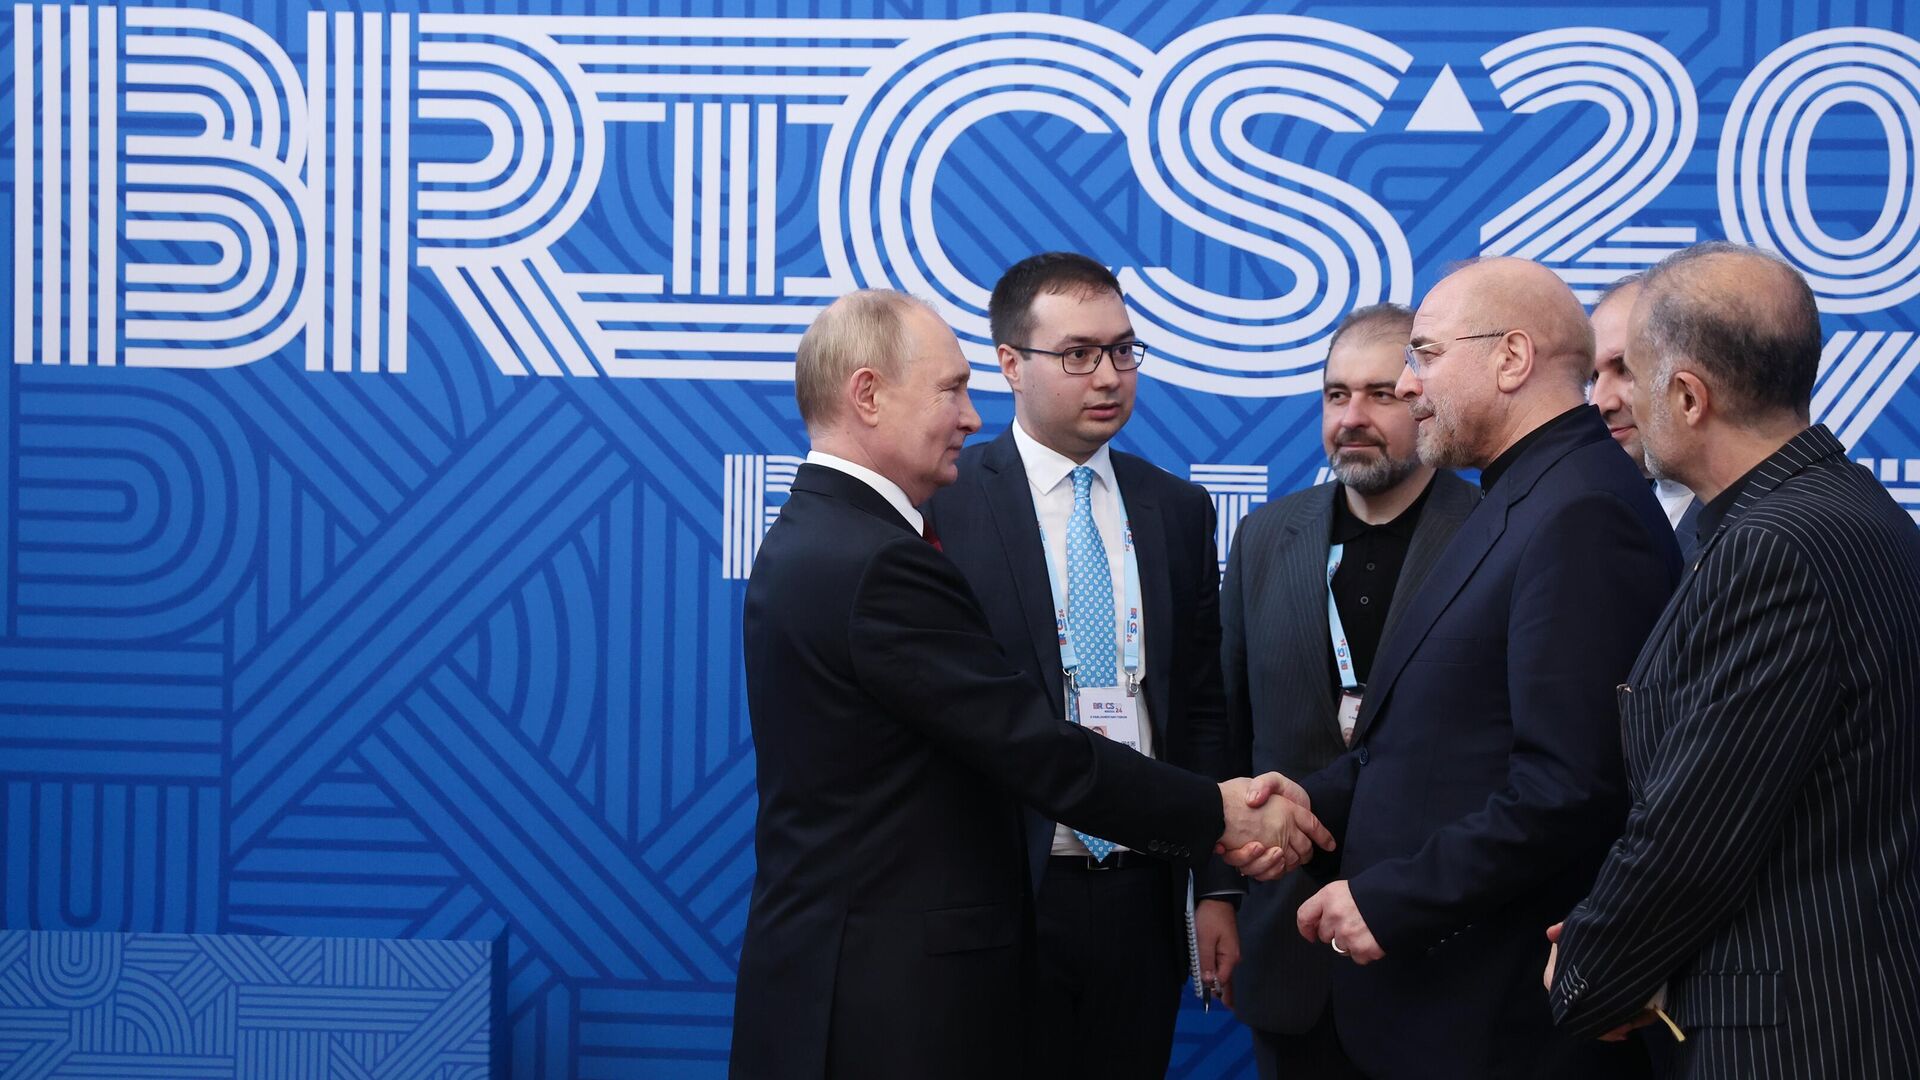 BRICS Parliament: Putin’s Bold Move for Global Influence